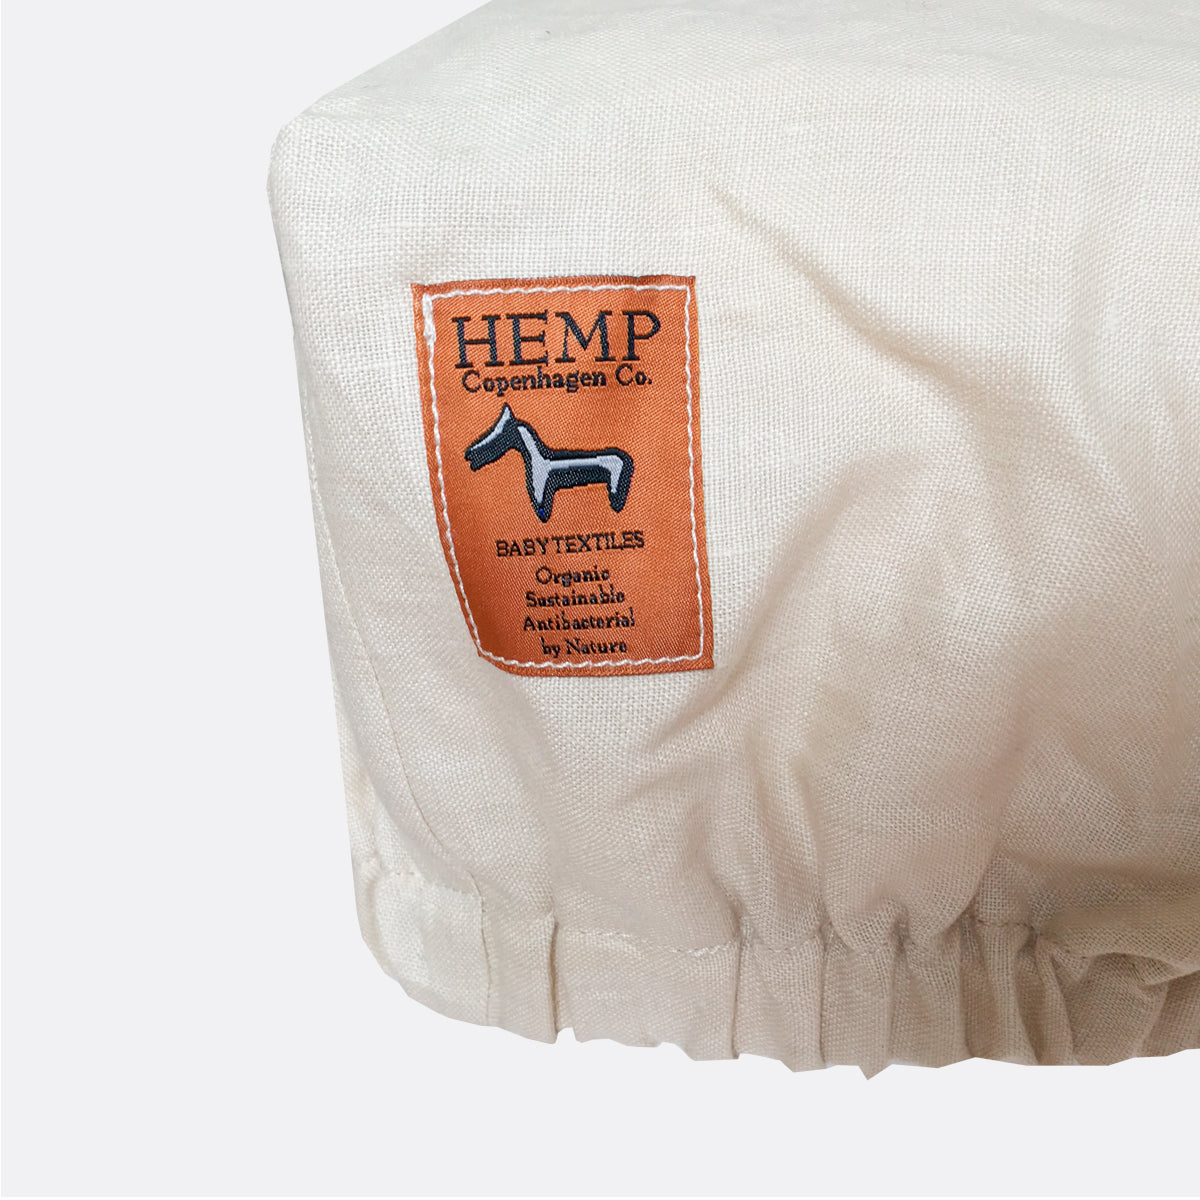 Hemp Copenhagen Co. Fitted sheet Toddler 100% Hemp White or Natural Grey